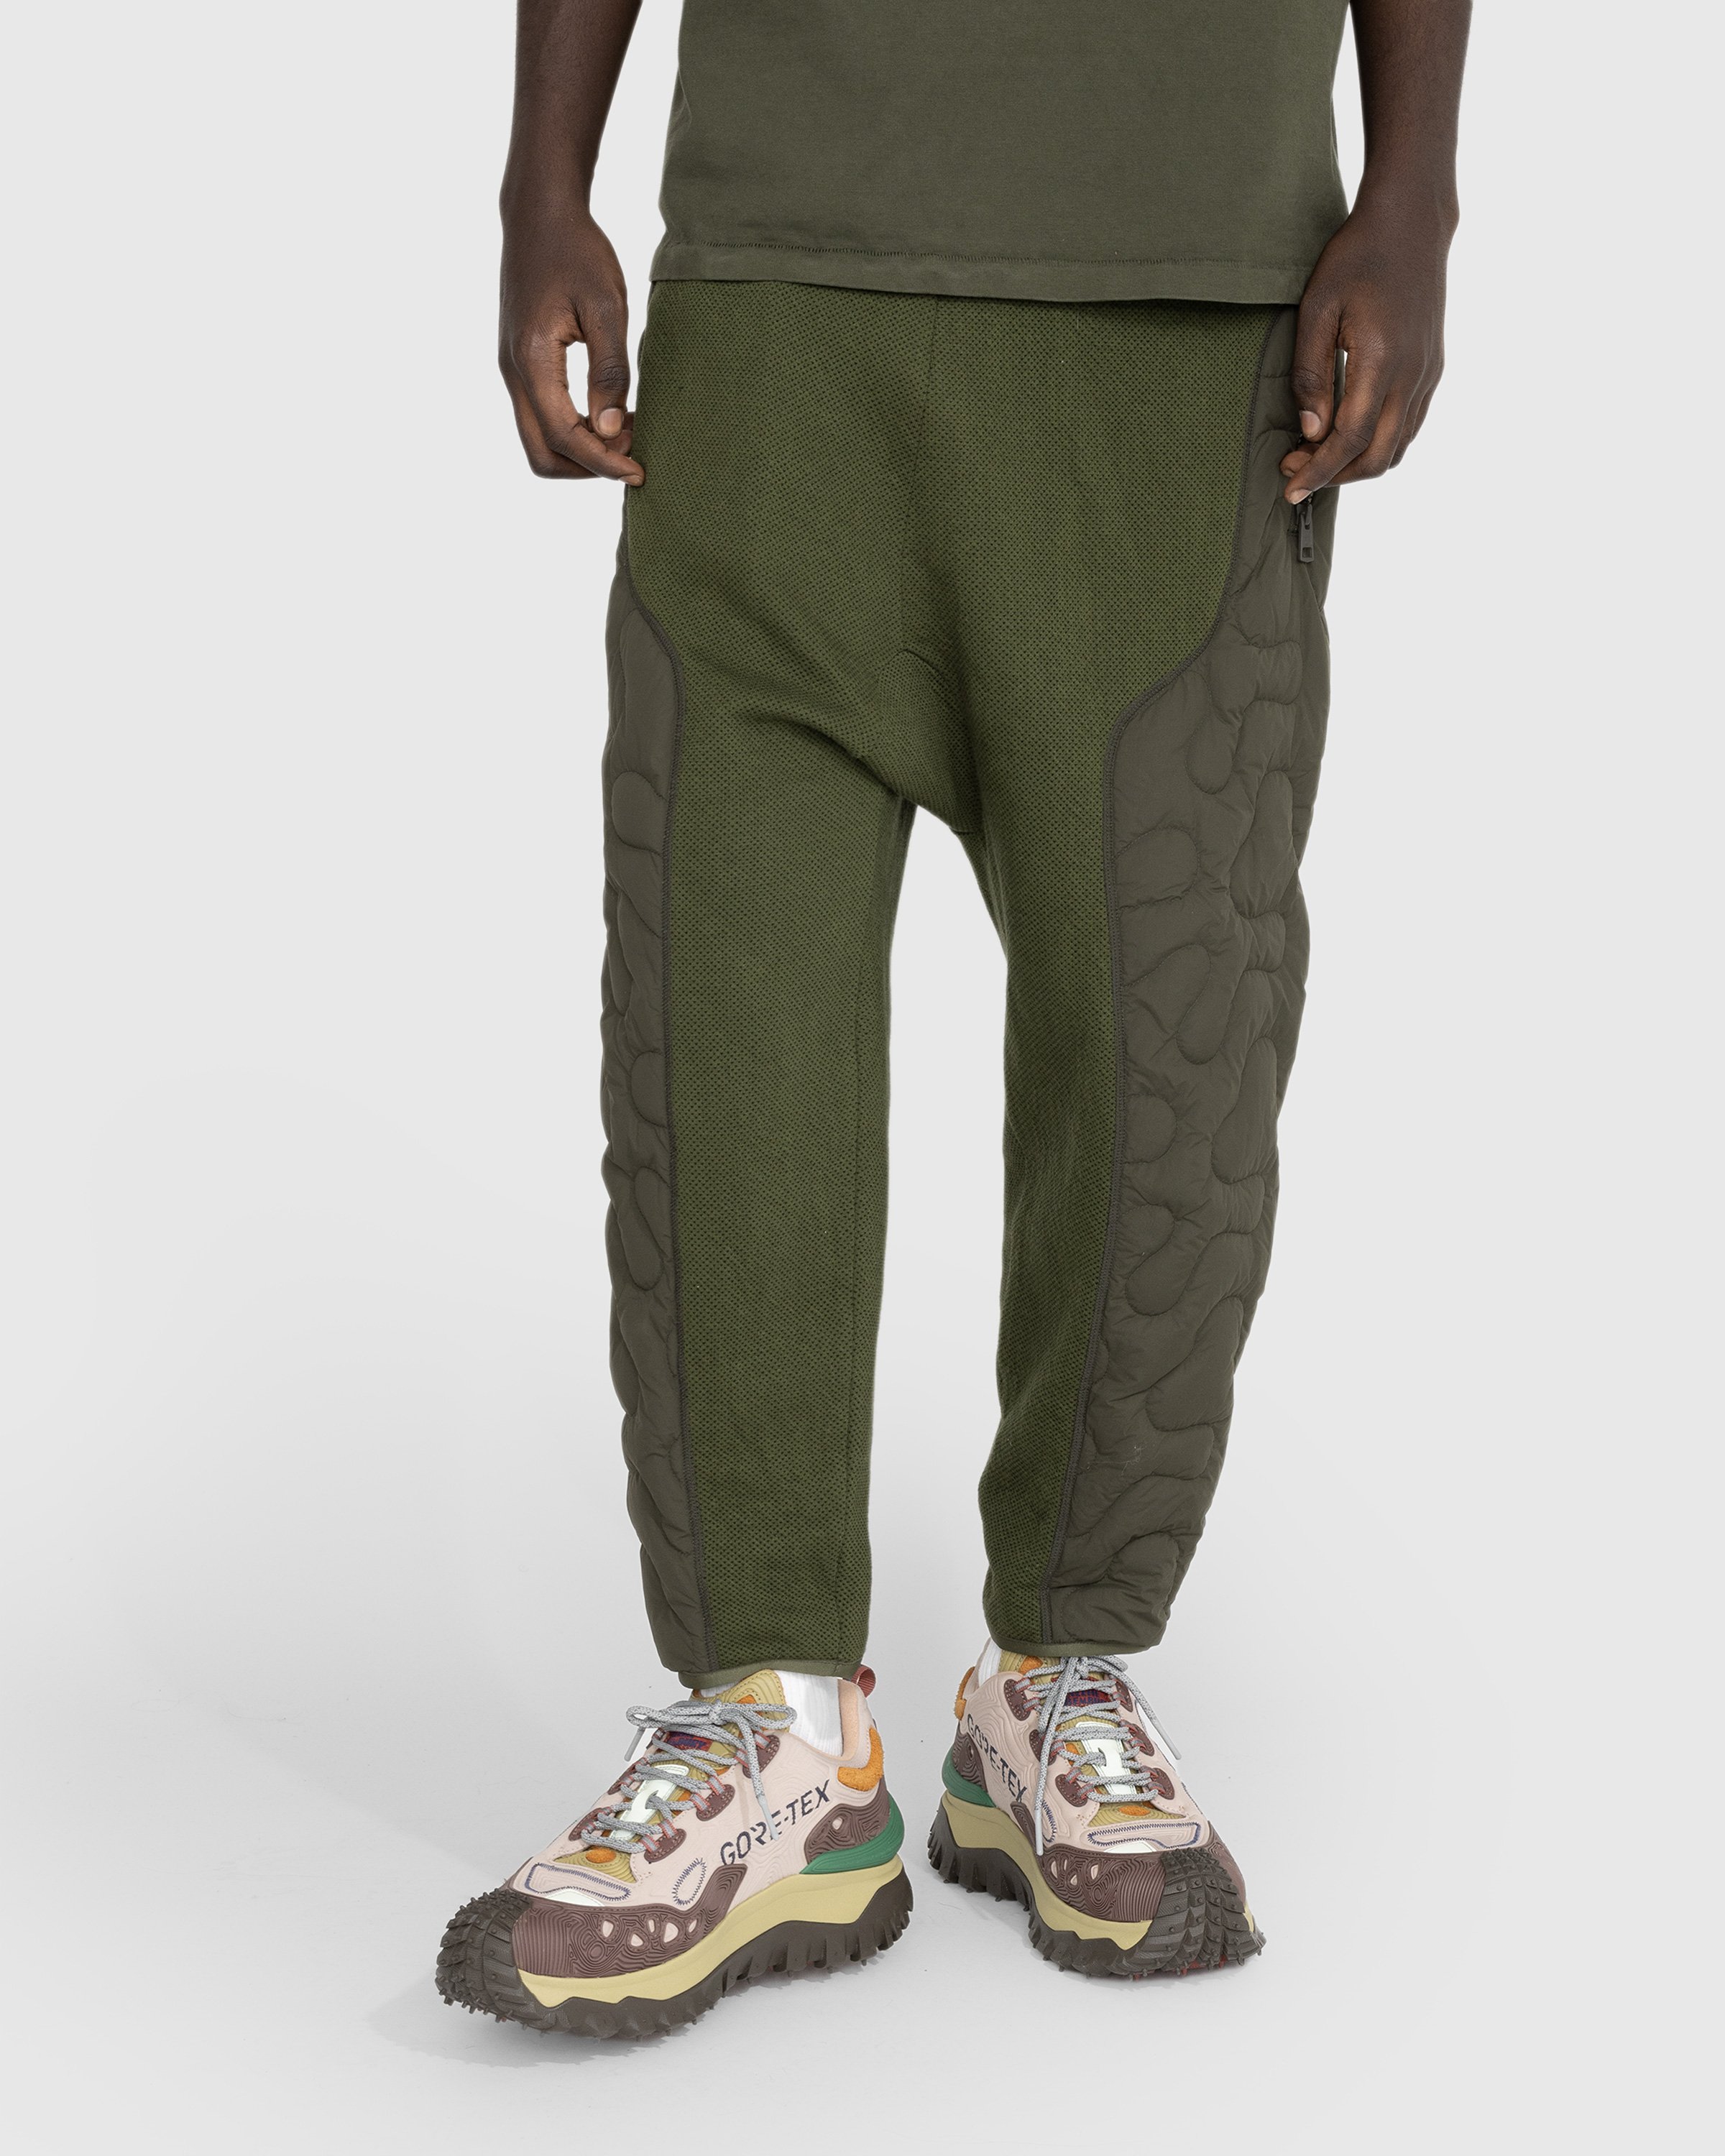 Moncler x Salehe Bembury - Padded Pants Green - Clothing - Green - Image 2